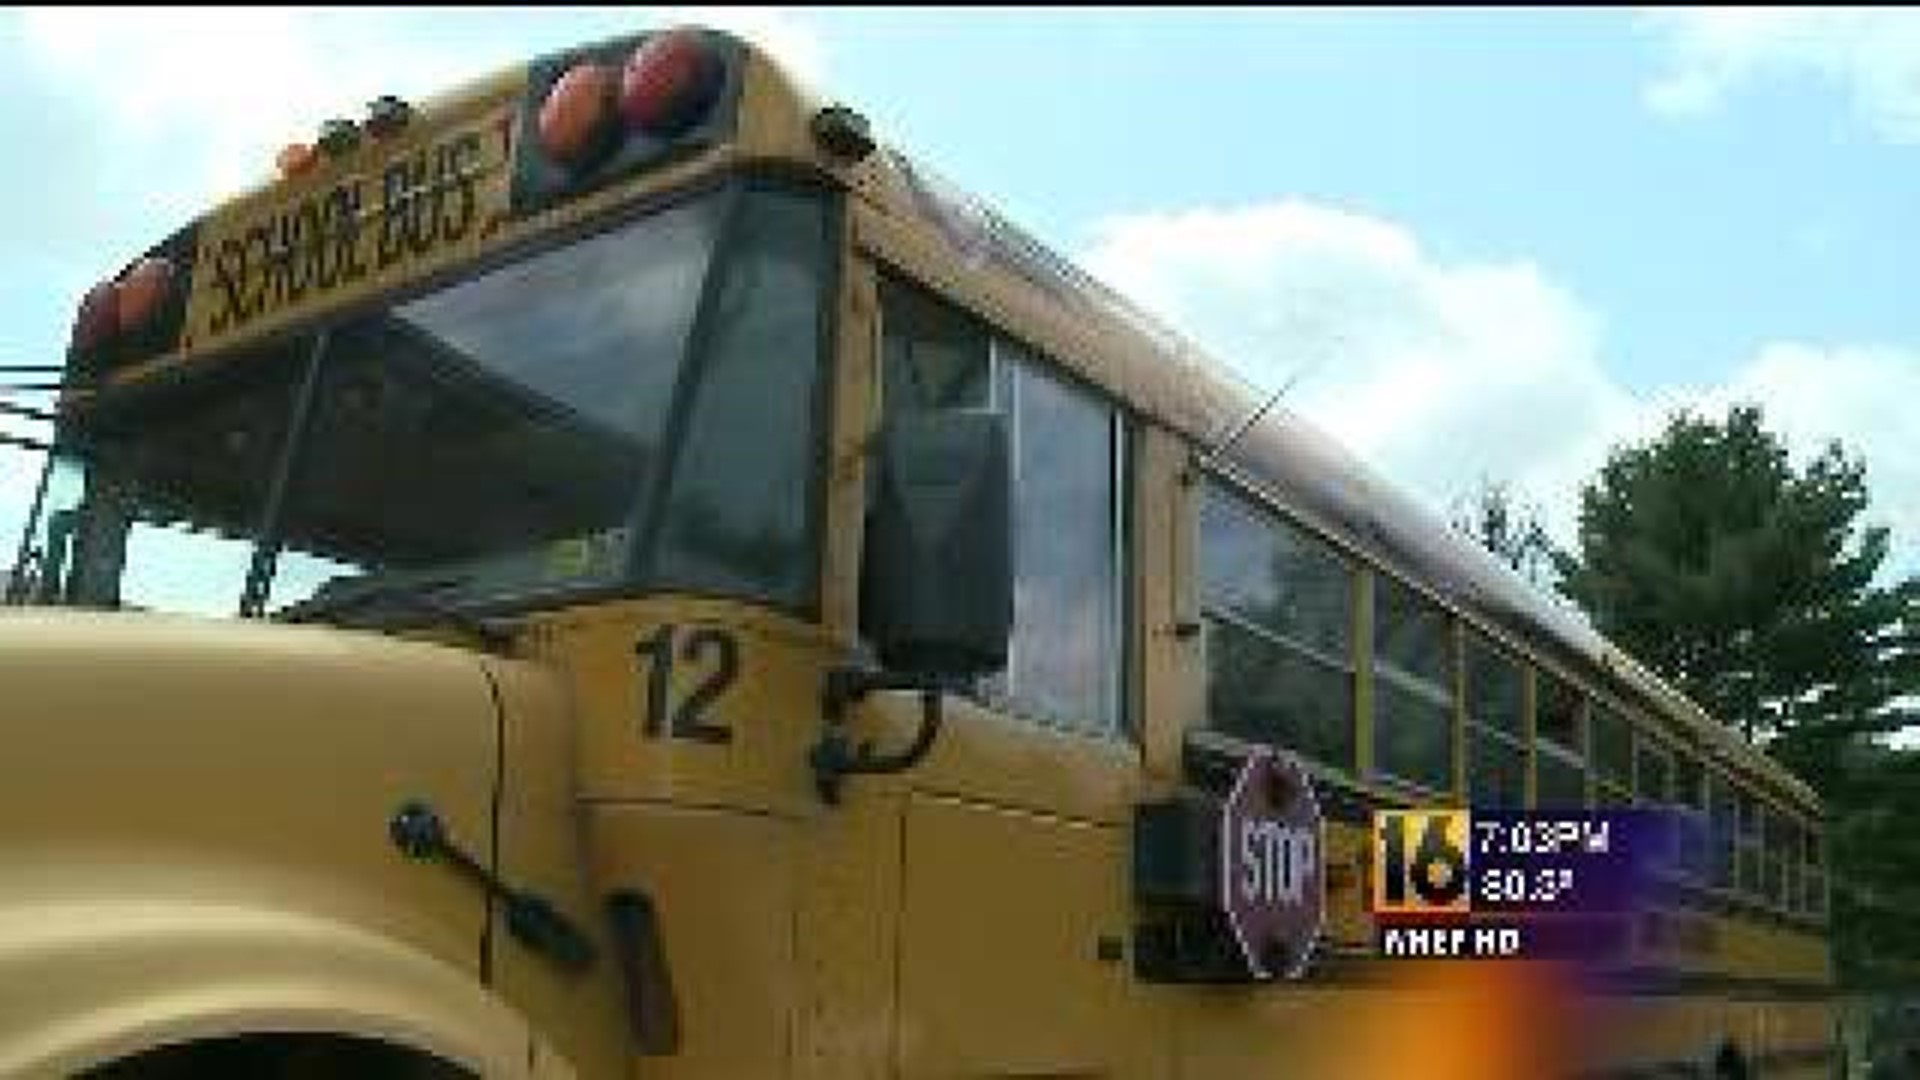 Bus Safety Concerns in Luzerne Co. as School Starts